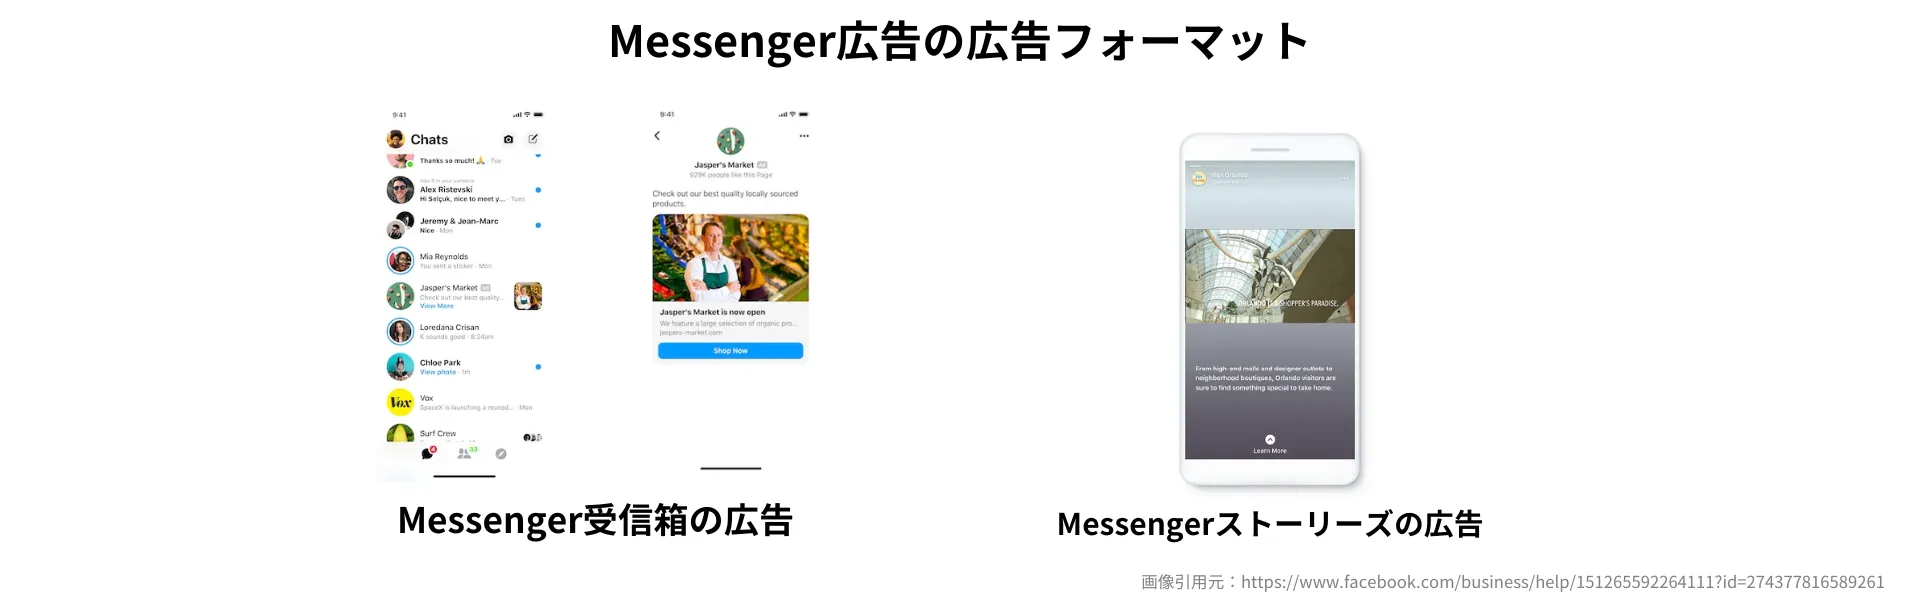 Messenger広告のフォーマット画像